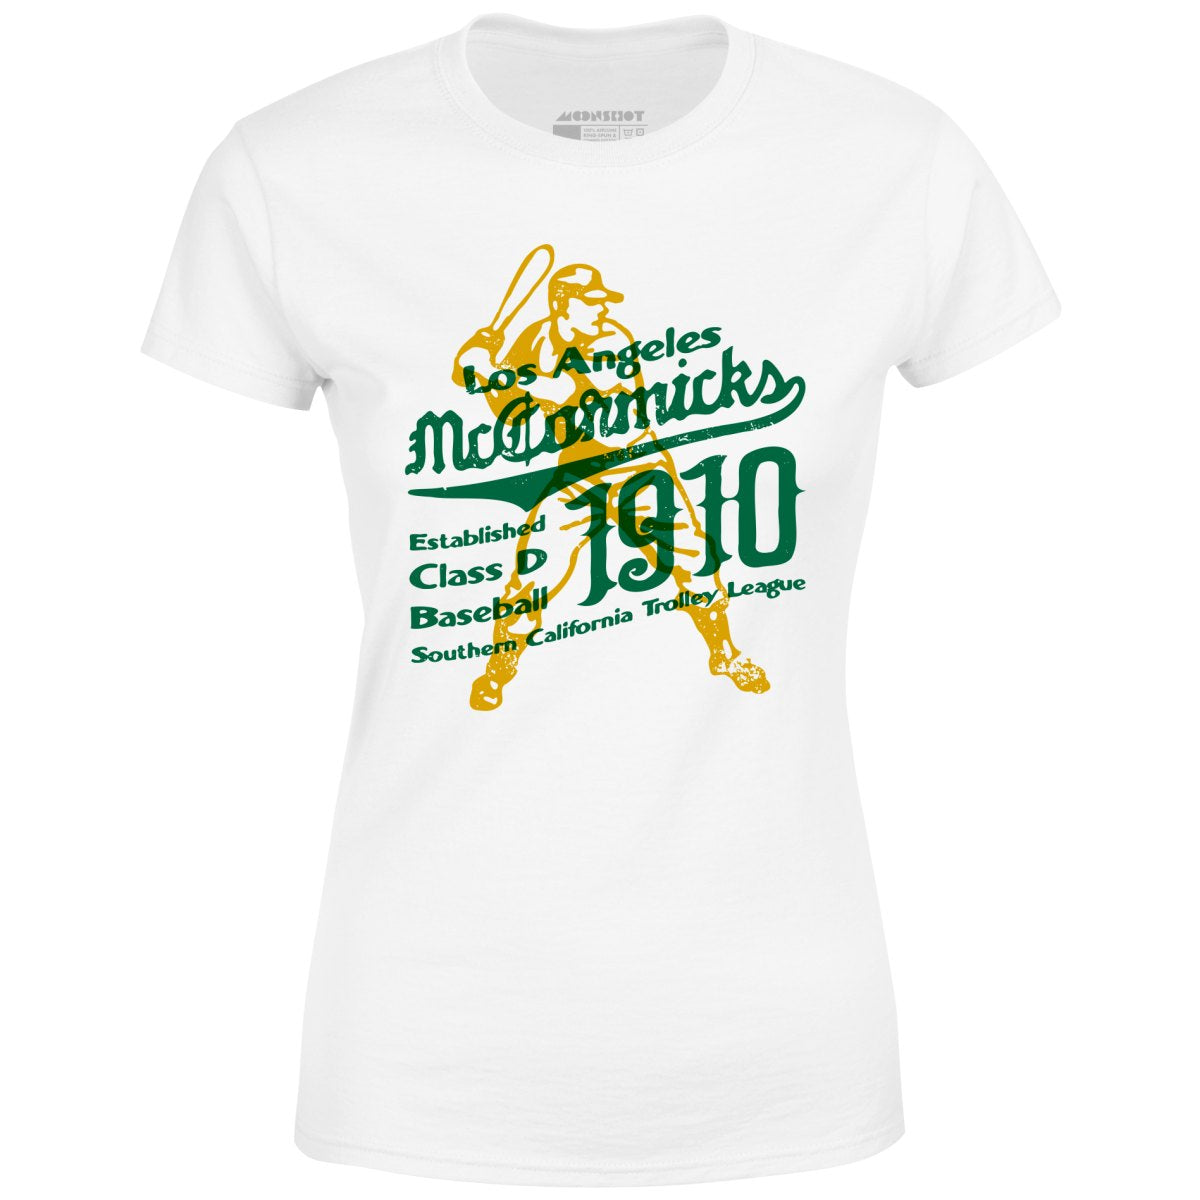 Los Angeles McCormick's - California - Vintage Defunct Baseball Teams - Women's T-Shirt